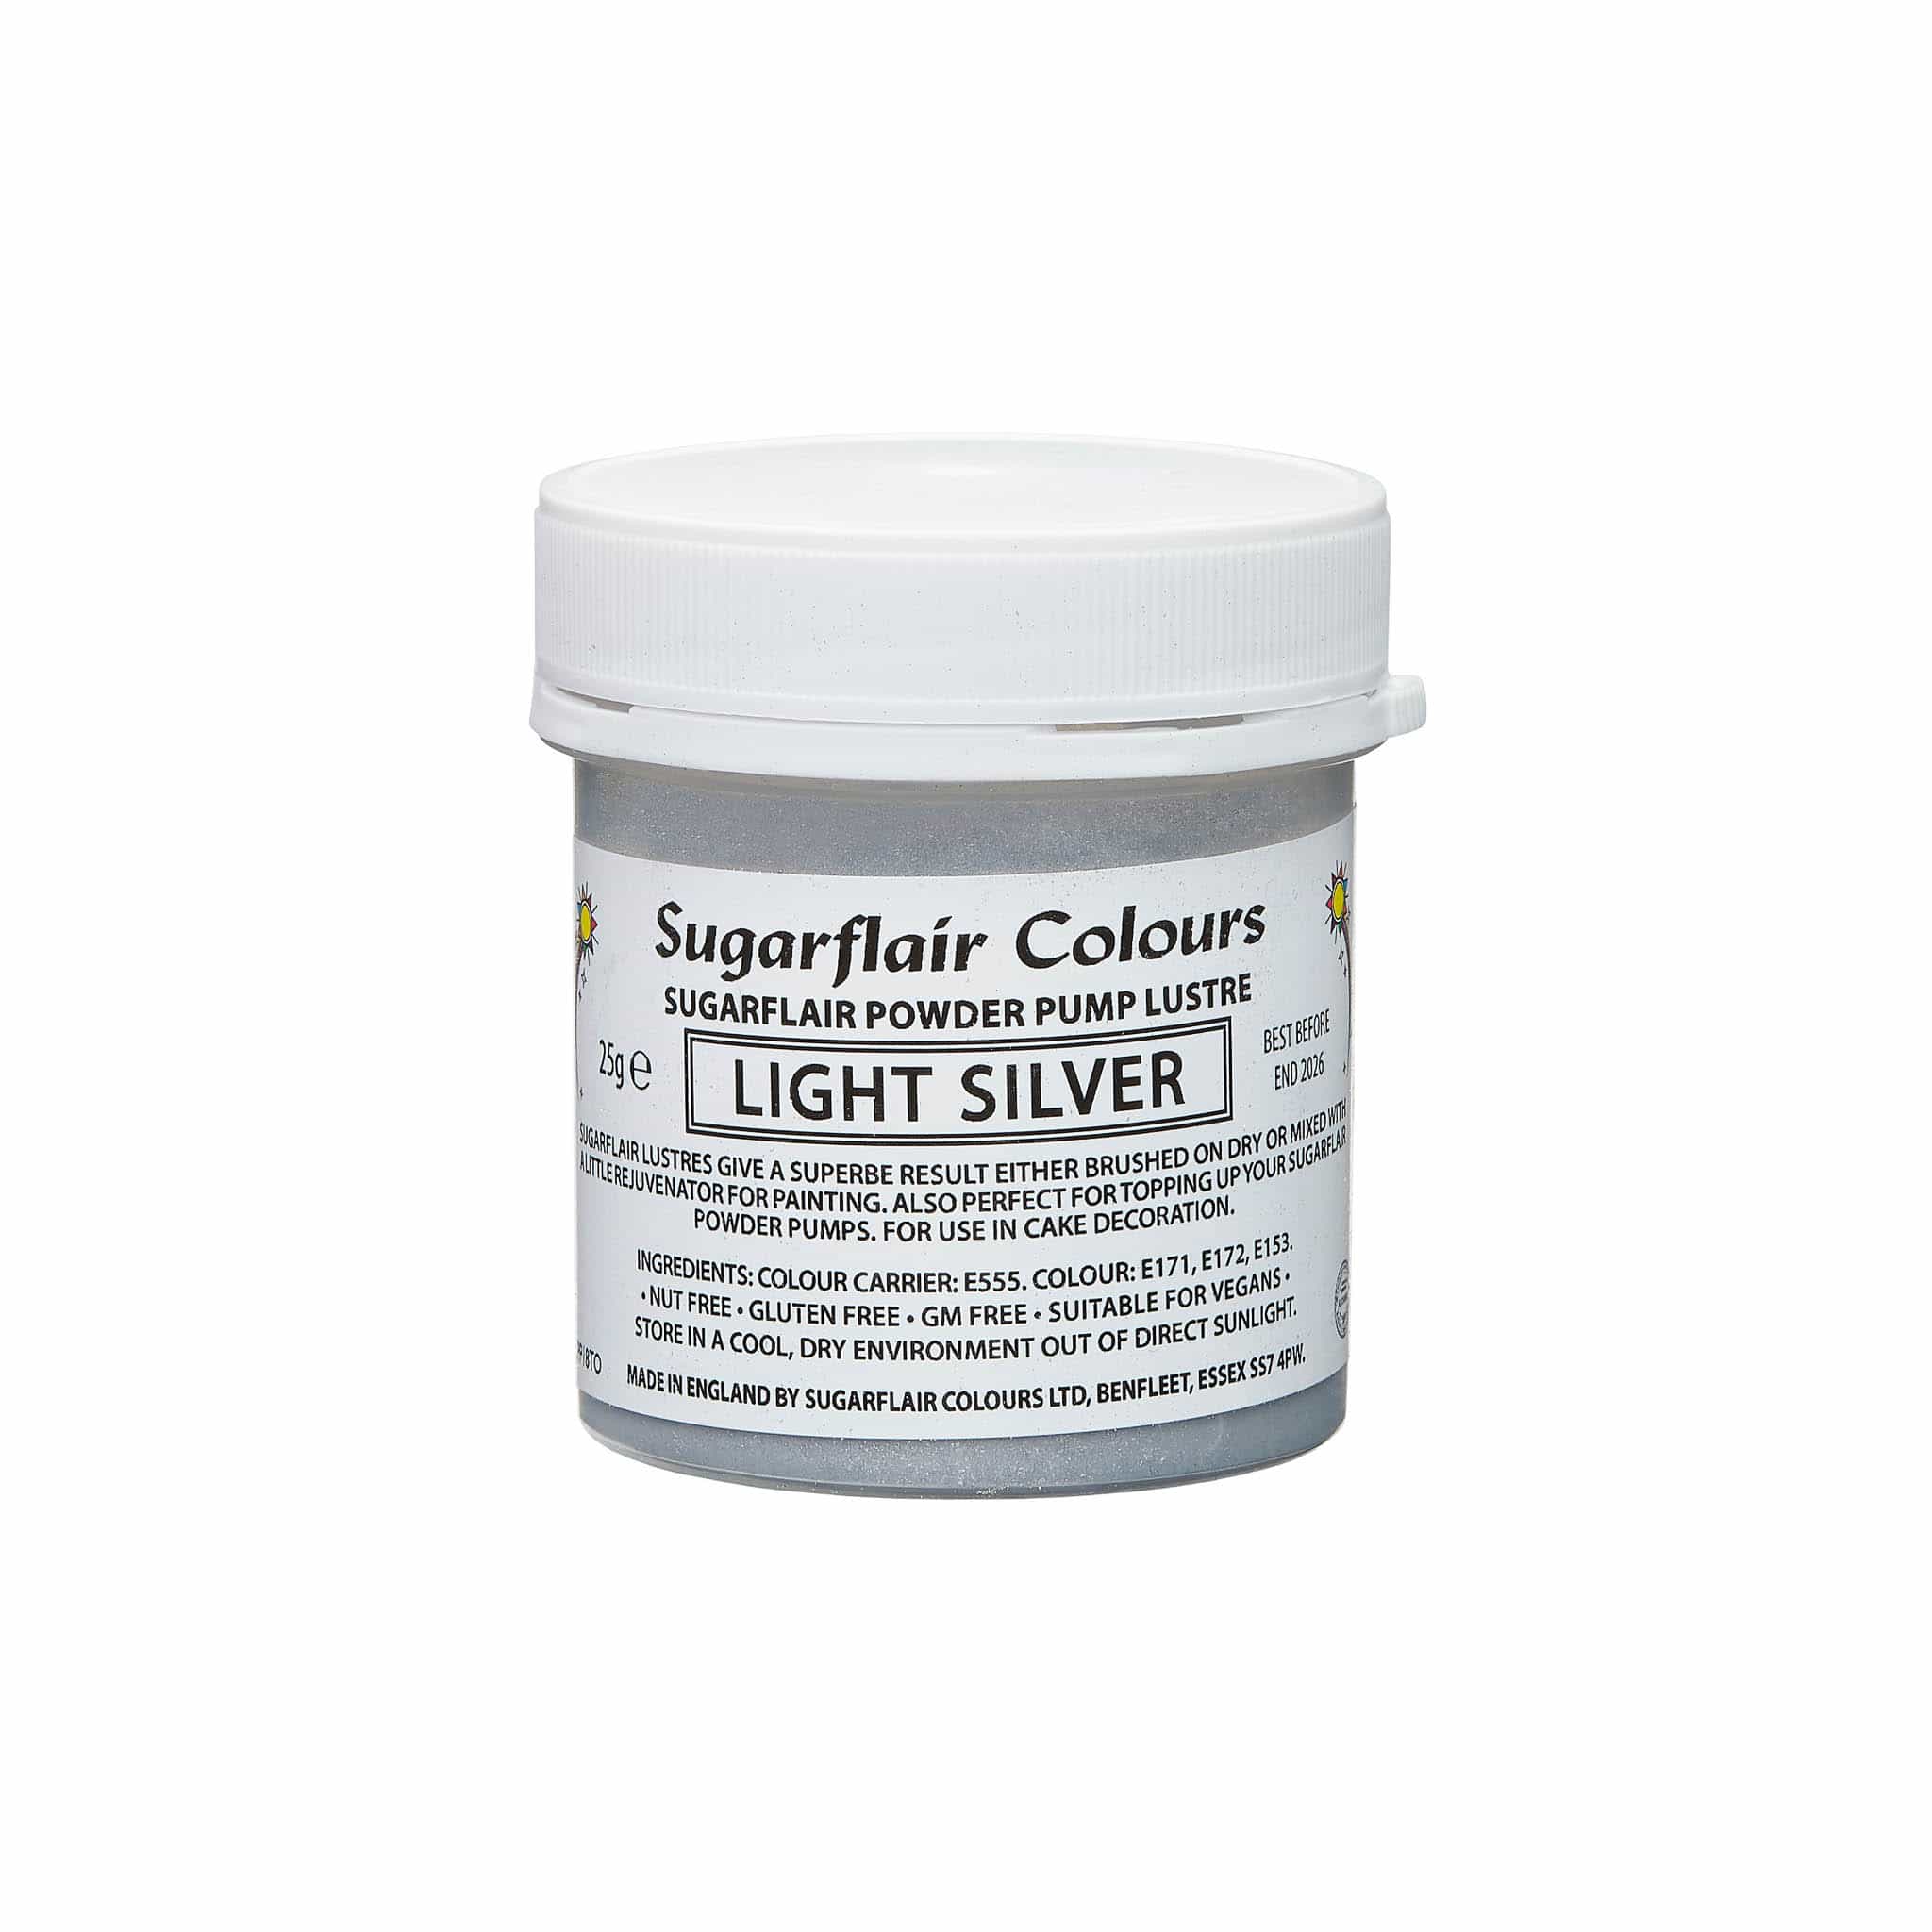 Sugarflair Edible Glitter Lustre Spray Pump Refill, Light Silver 25g